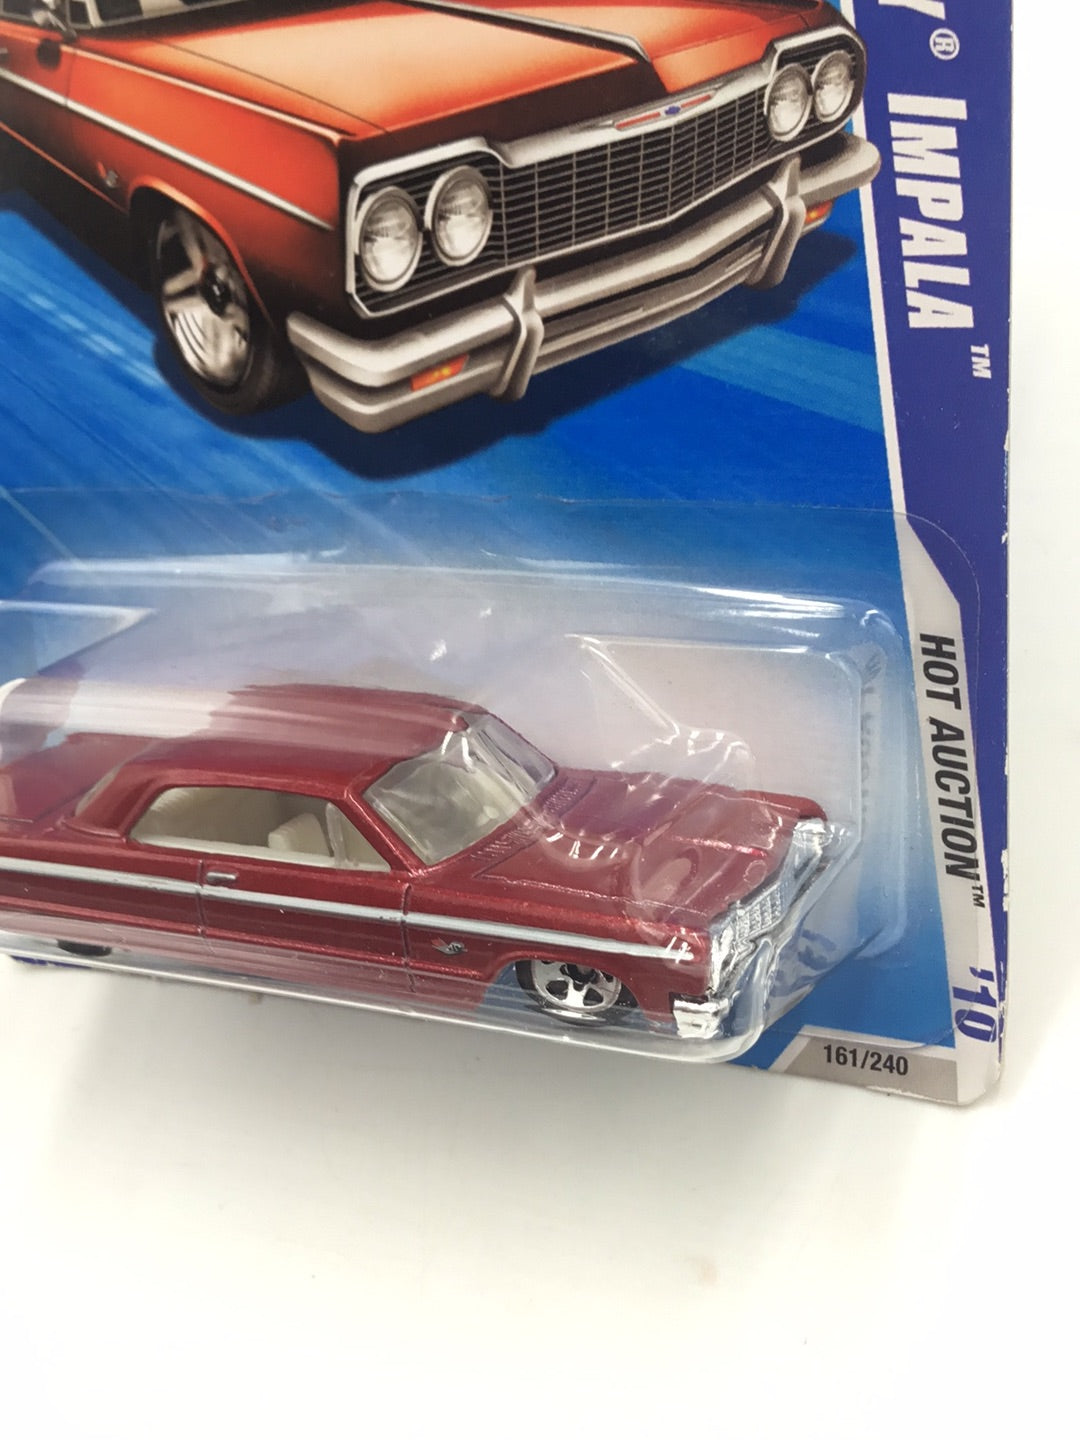 2010 Hot Wheels #161 1964 Chevy Impala Z3